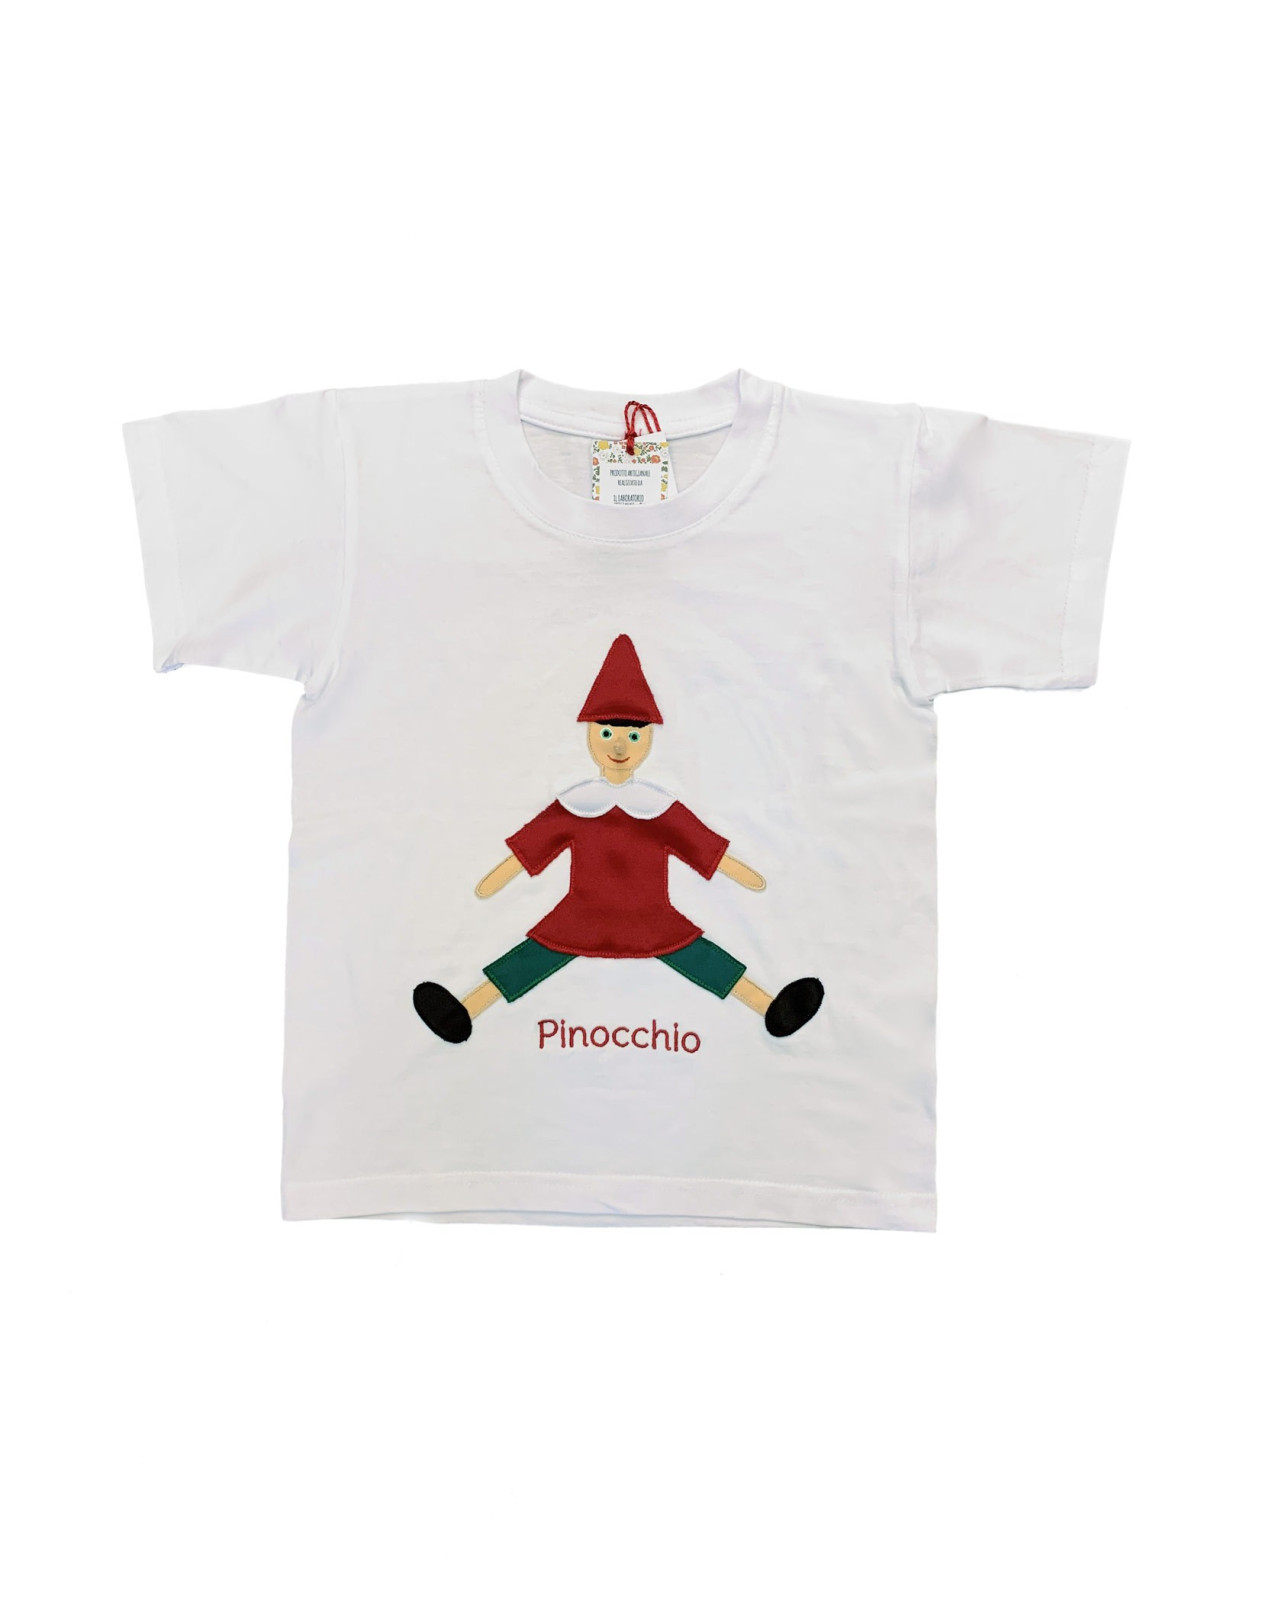 Pinocchio T-shirt artigianale